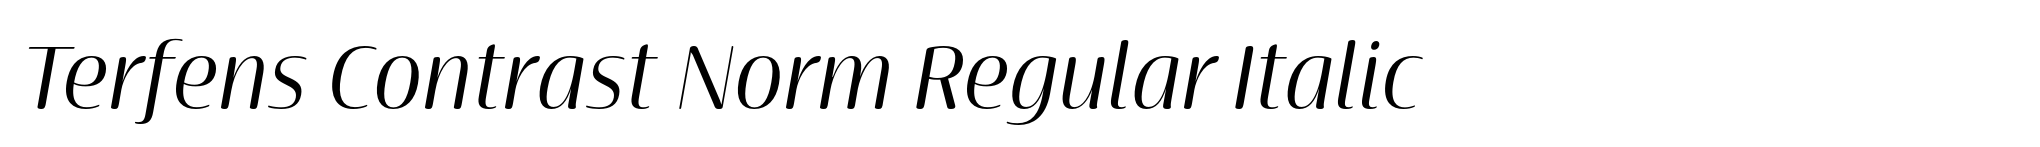 Terfens Contrast Norm Regular Italic image